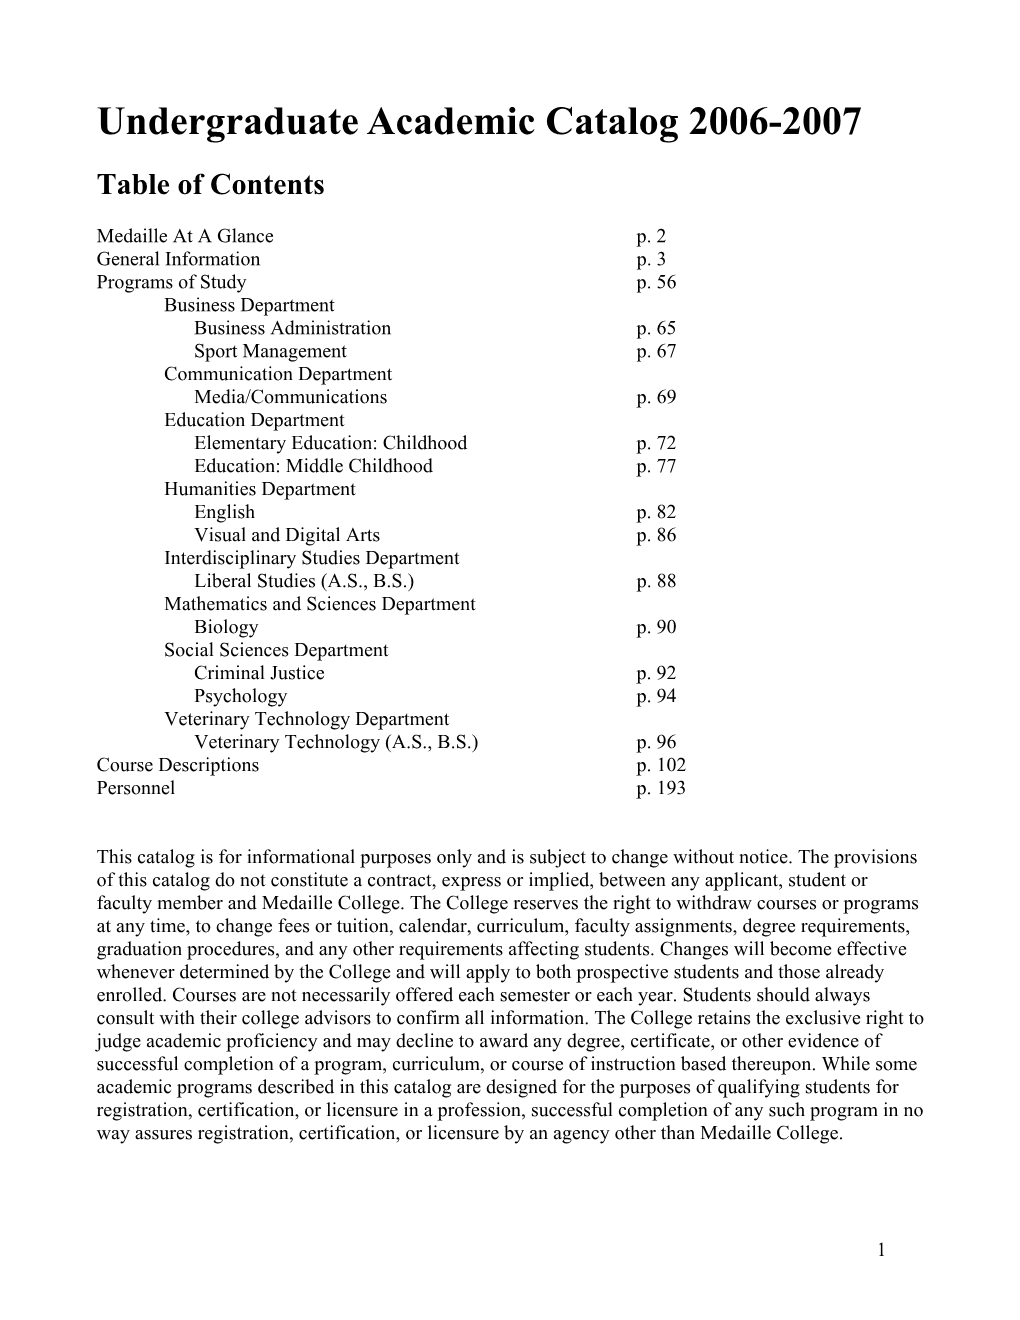 Undergraduate Academic Catalog 2006-2007 Table of Contents